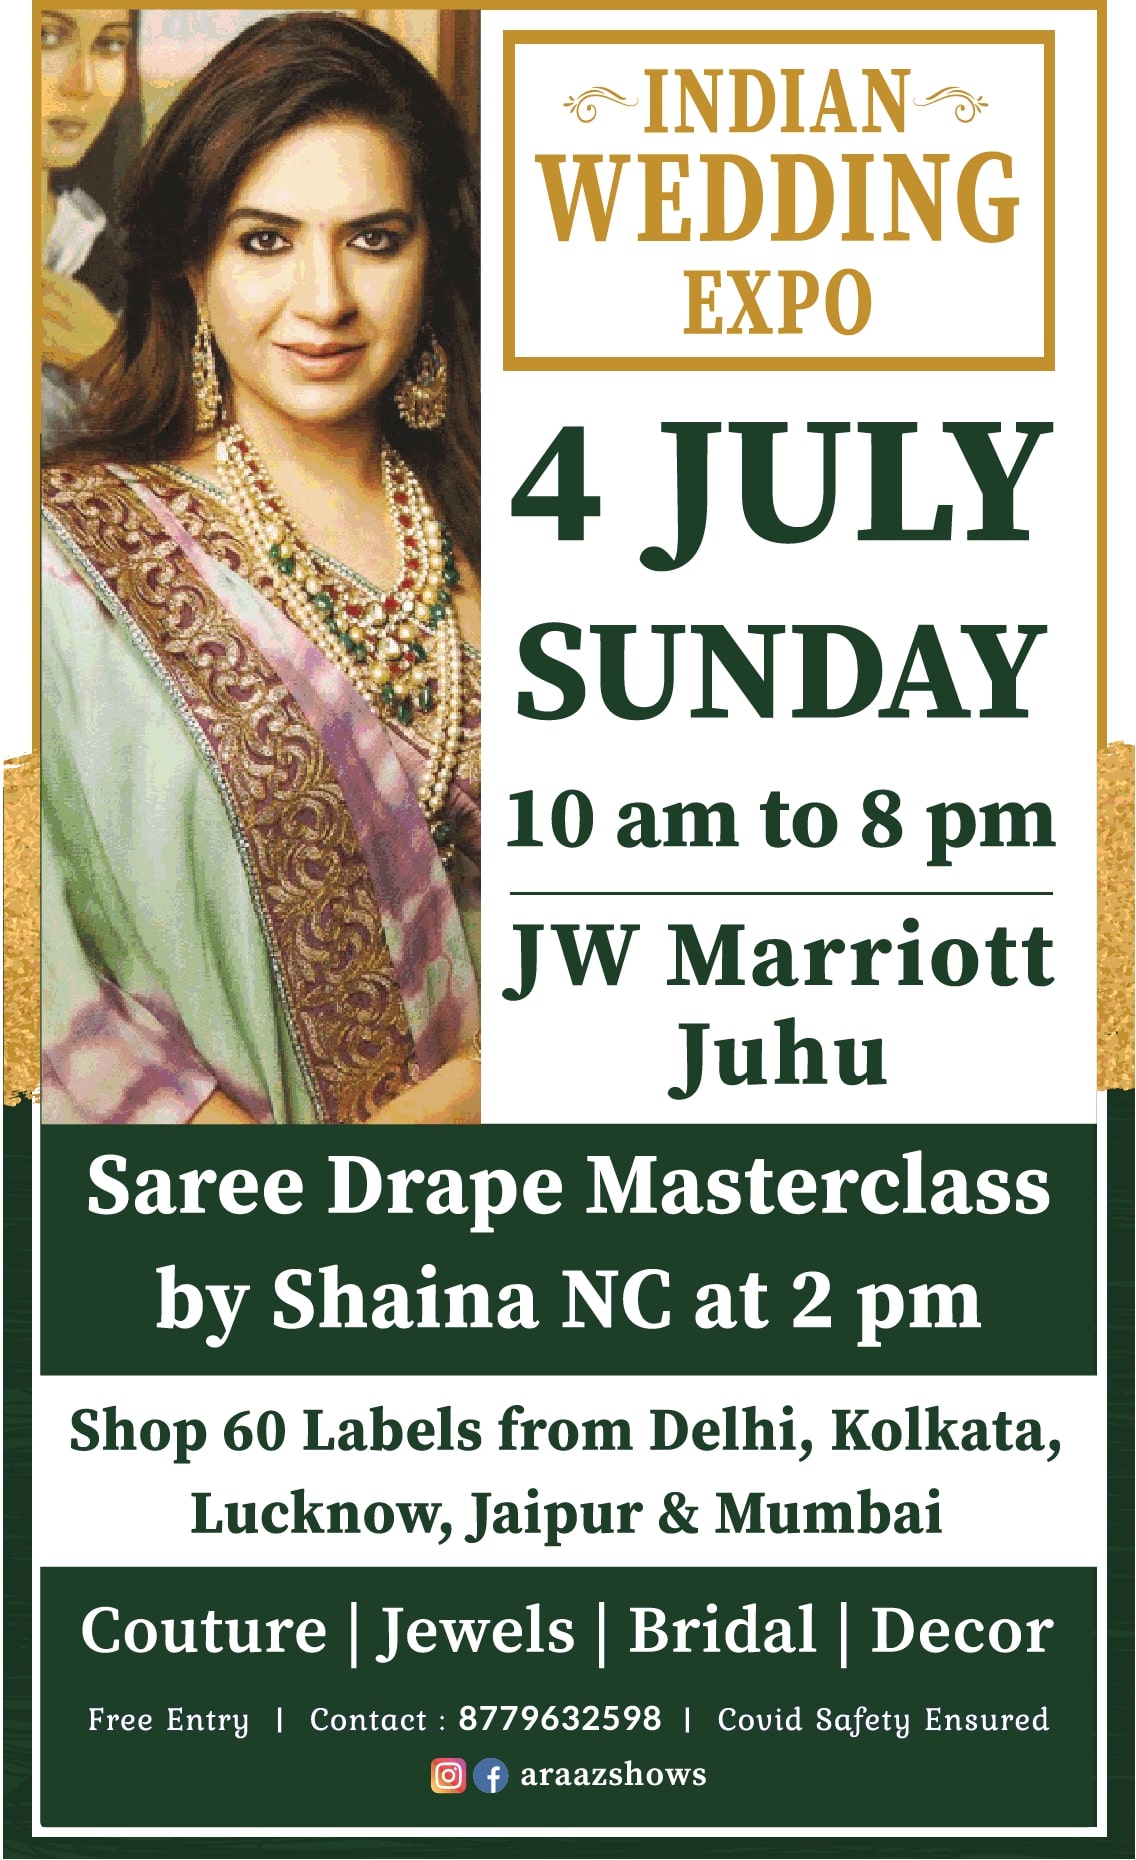 indian-wedding-expo-4-july-sunday-jw-marriott-juhu-ad-bombay-times-03-07-2021